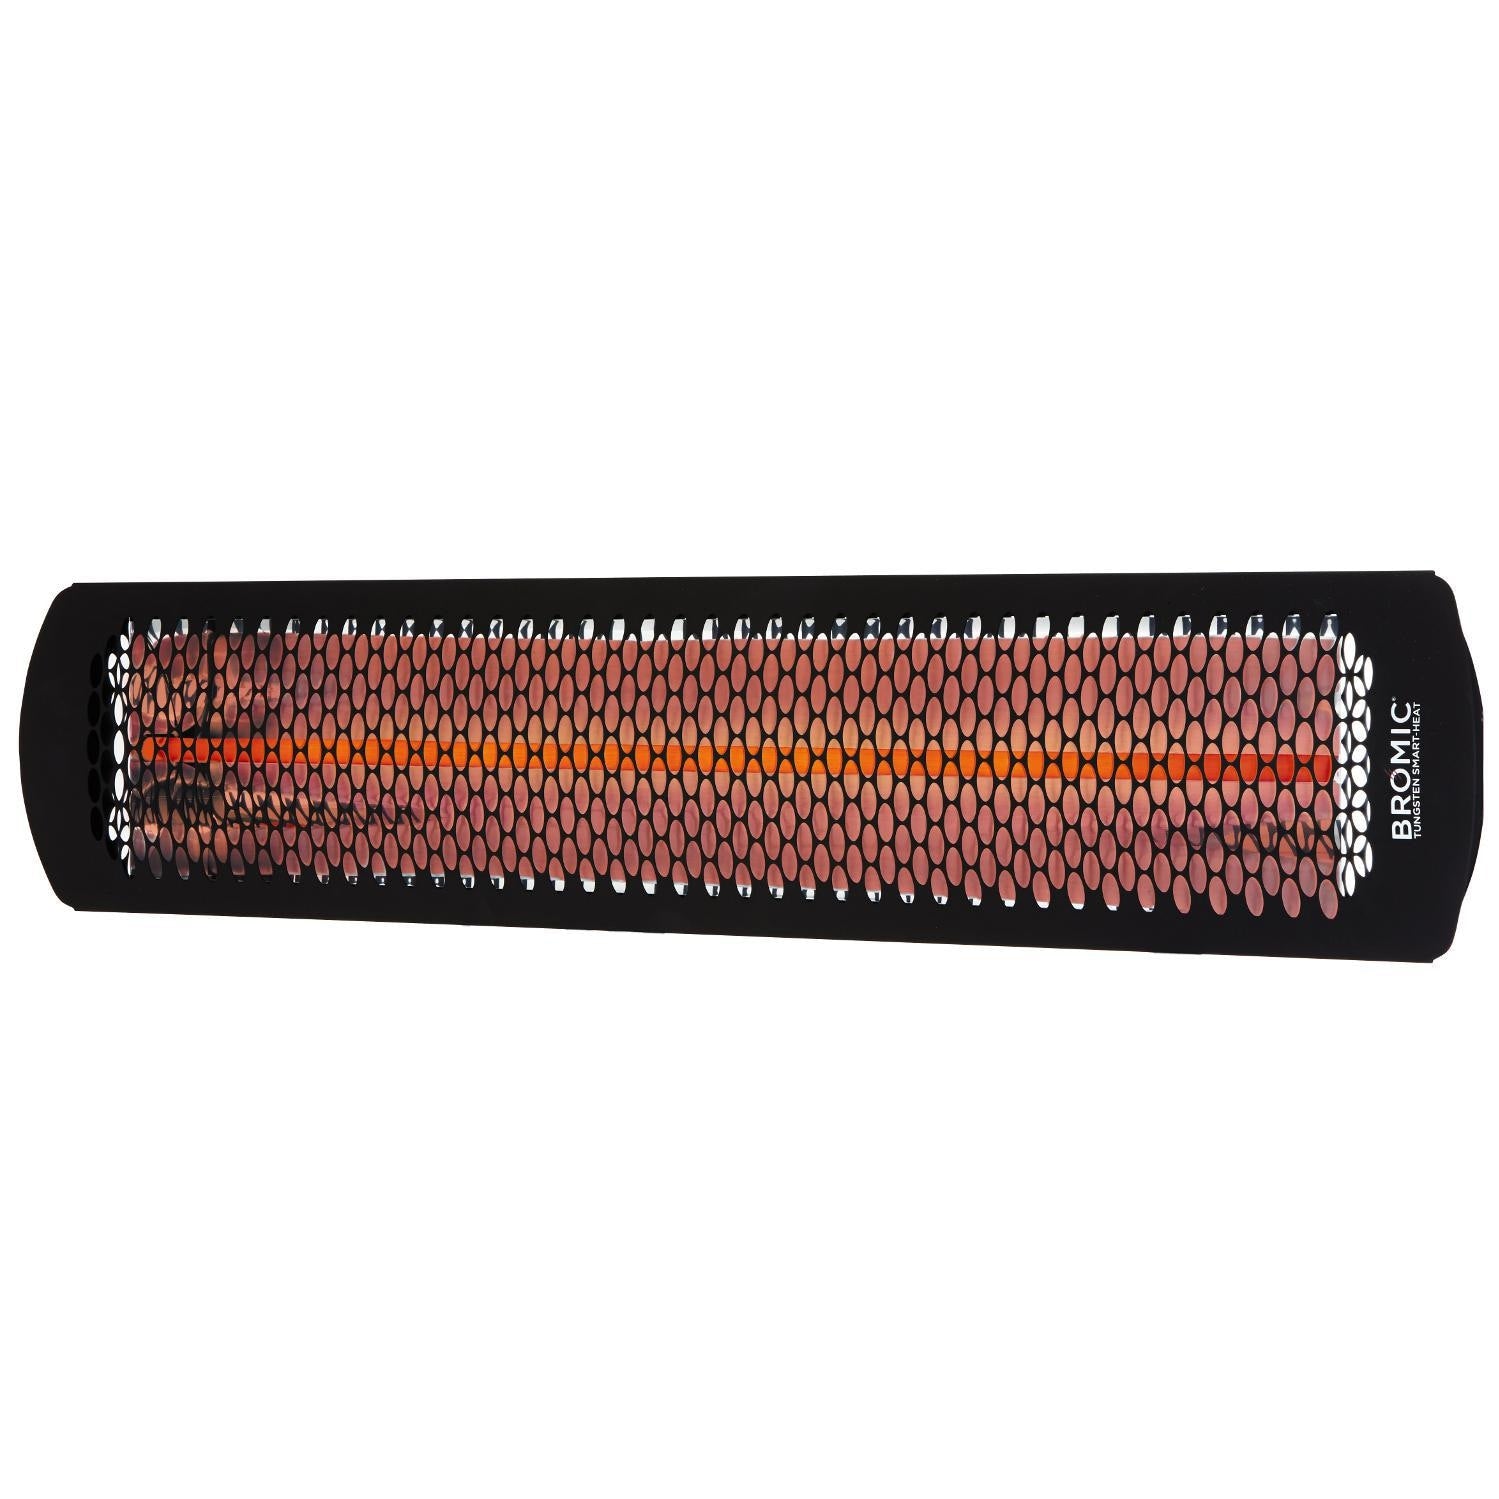 Bromic Heating - Tungsten Smart-Heat 44-Inch 4000W Dual Element 240V Electric Infrared Patio Heater - Black